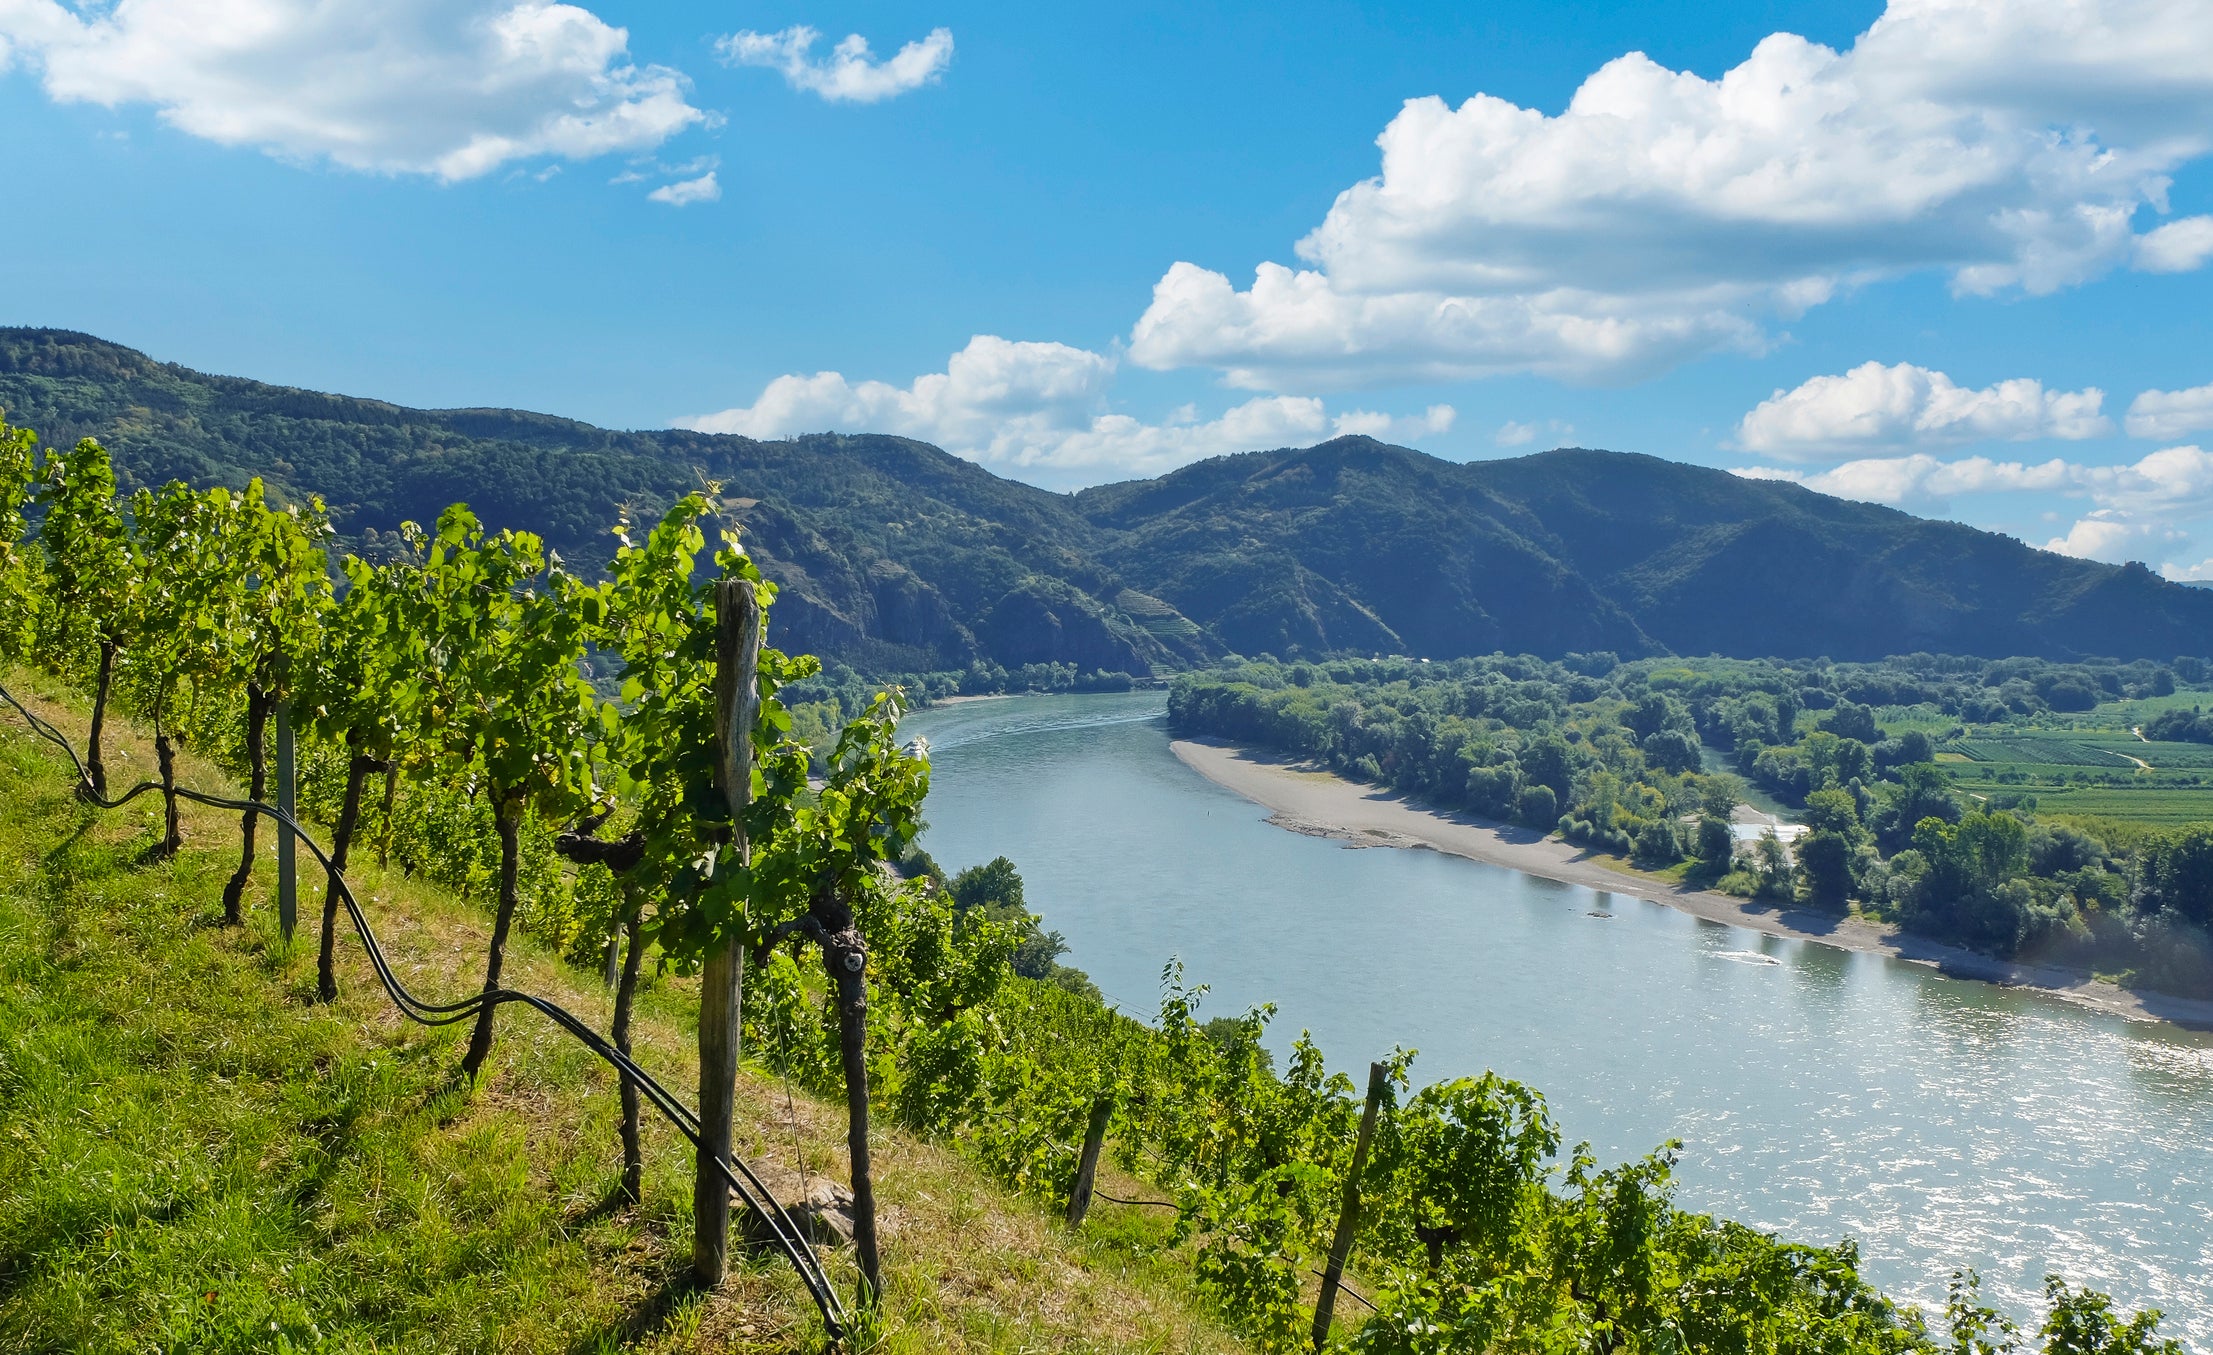 Cruise the vineyard-rich Wachau Valley to sample Austria’s finest whites